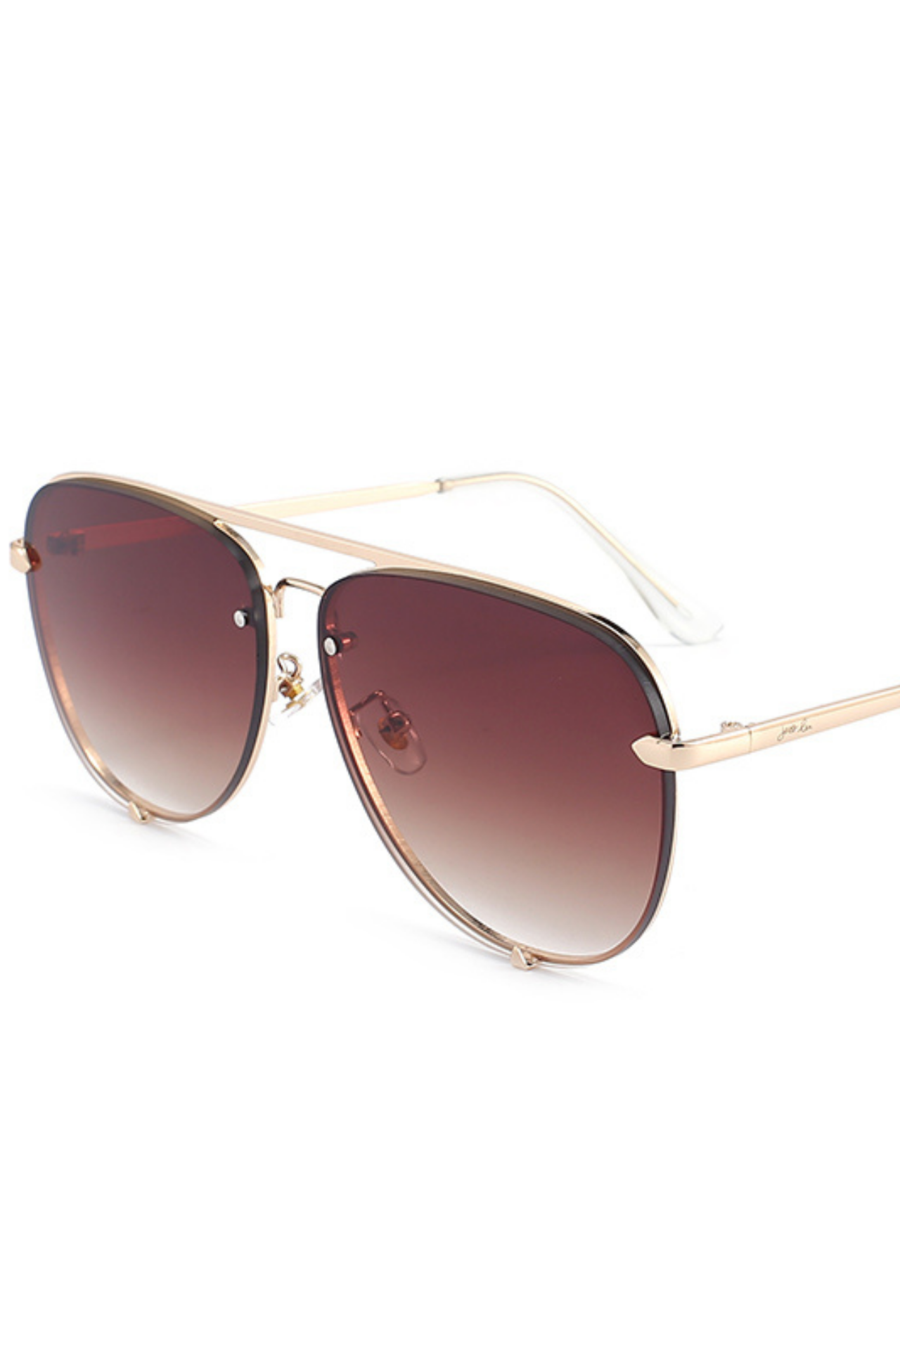 Hotel California Aviator Sunglasses- Gold/Brown